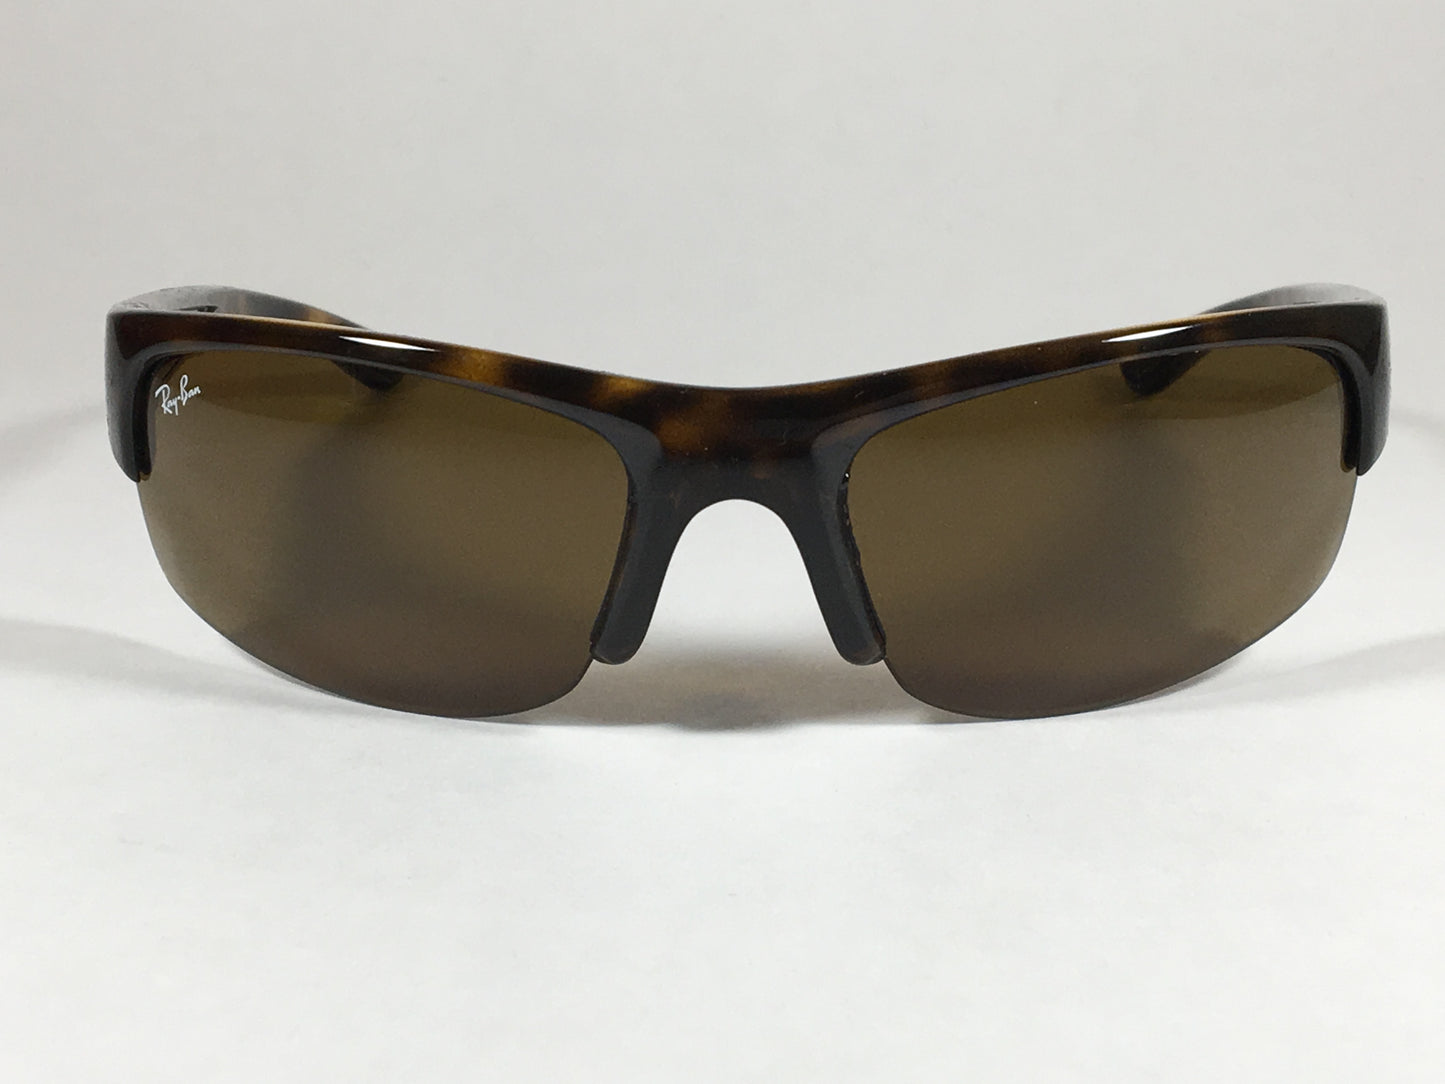 Ray-Ban Active Lifestyle Mens Sunglasses Rb4173 Sport Wrap Havana Brown Lens - Sunglasses